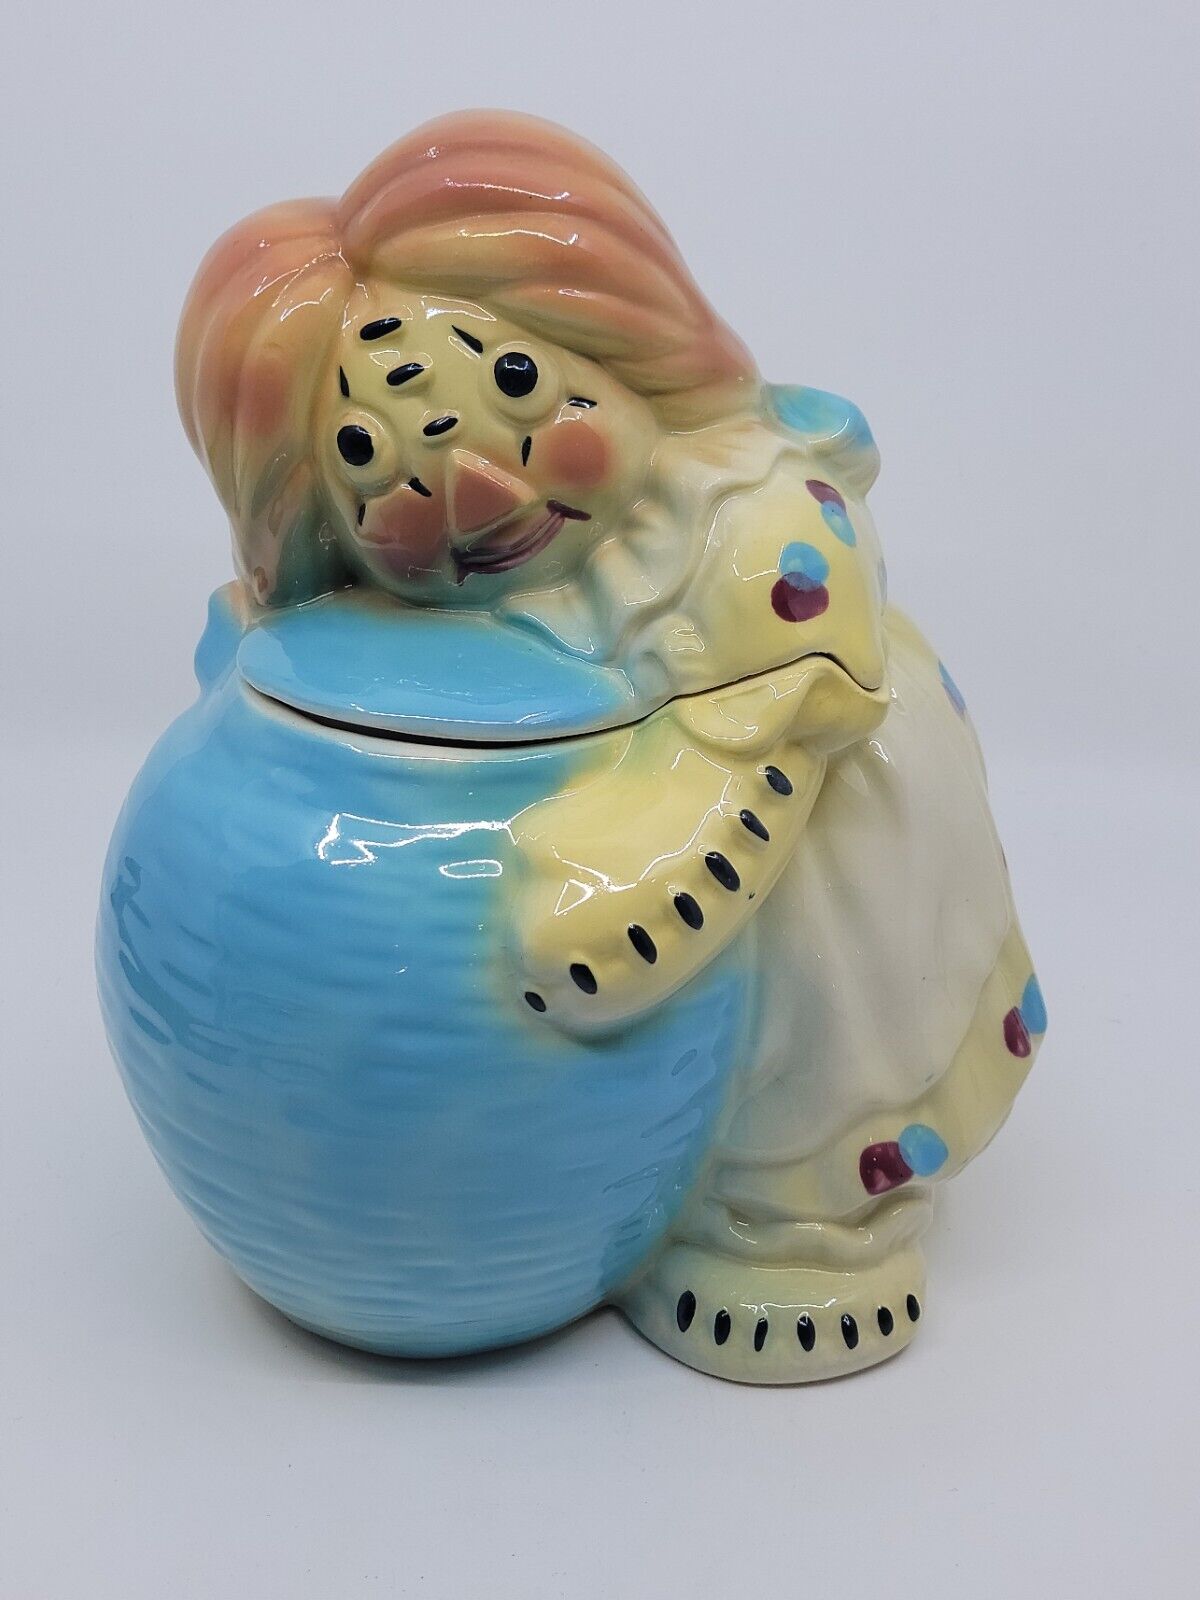 Vintage Ceramic Glazed Clown Cookie Jar Antique 1930-40s Unmarked Estate Find